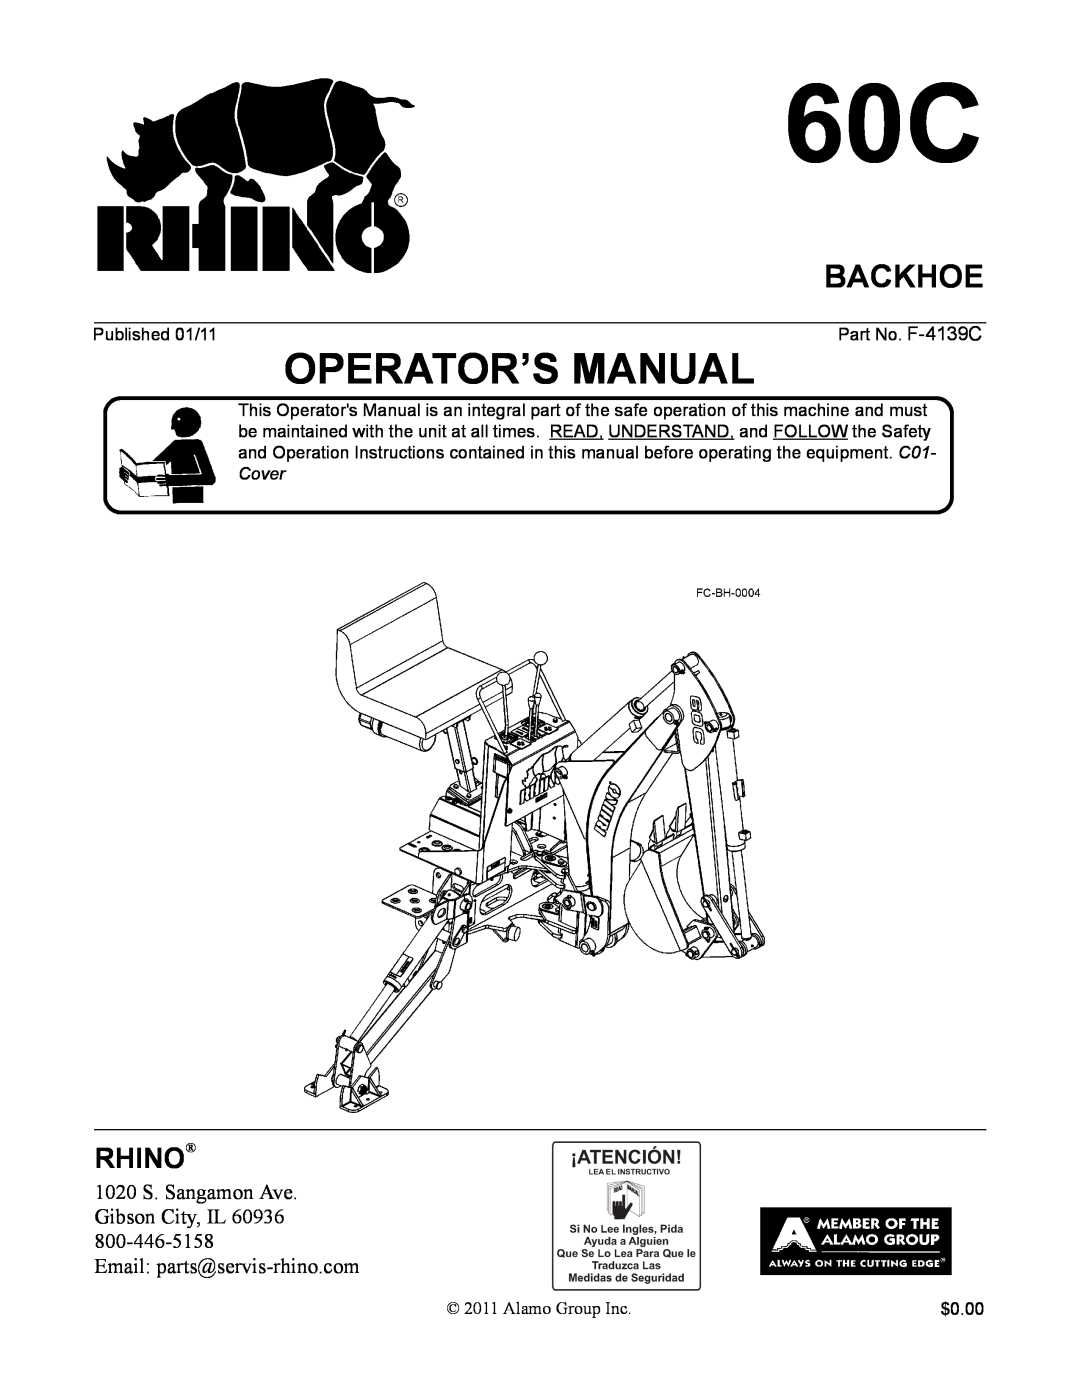 Servis-Rhino 60C manual Backhoe, Operator’S Manual, Rhino, 1020 S. Sangamon Ave Gibson City, IL 60936 